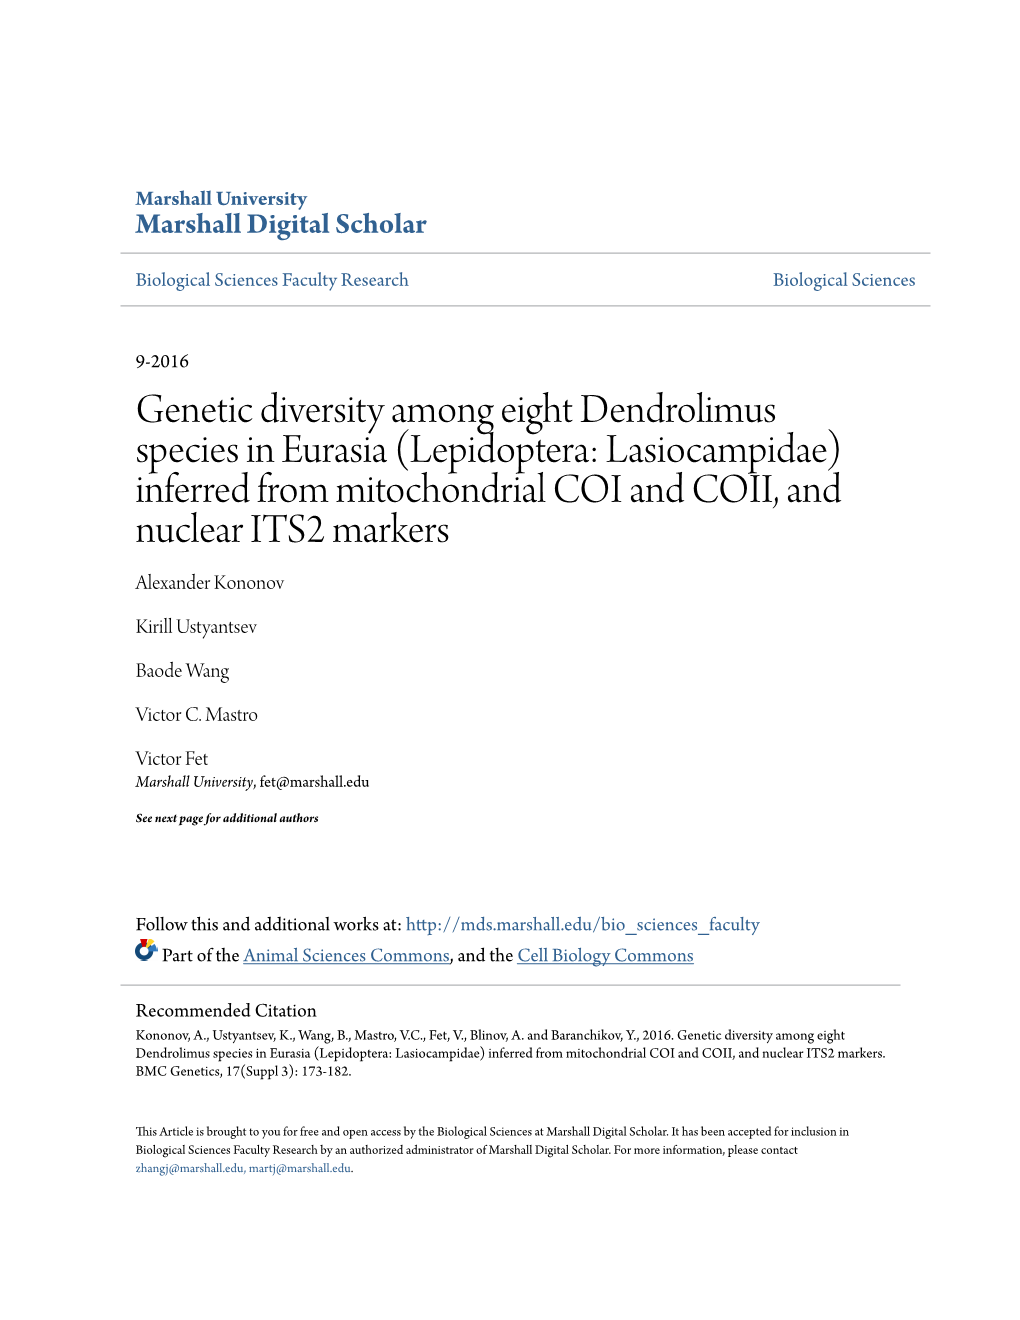 Genetic Diversity Among Eight Dendrolimus Species in Eurasia